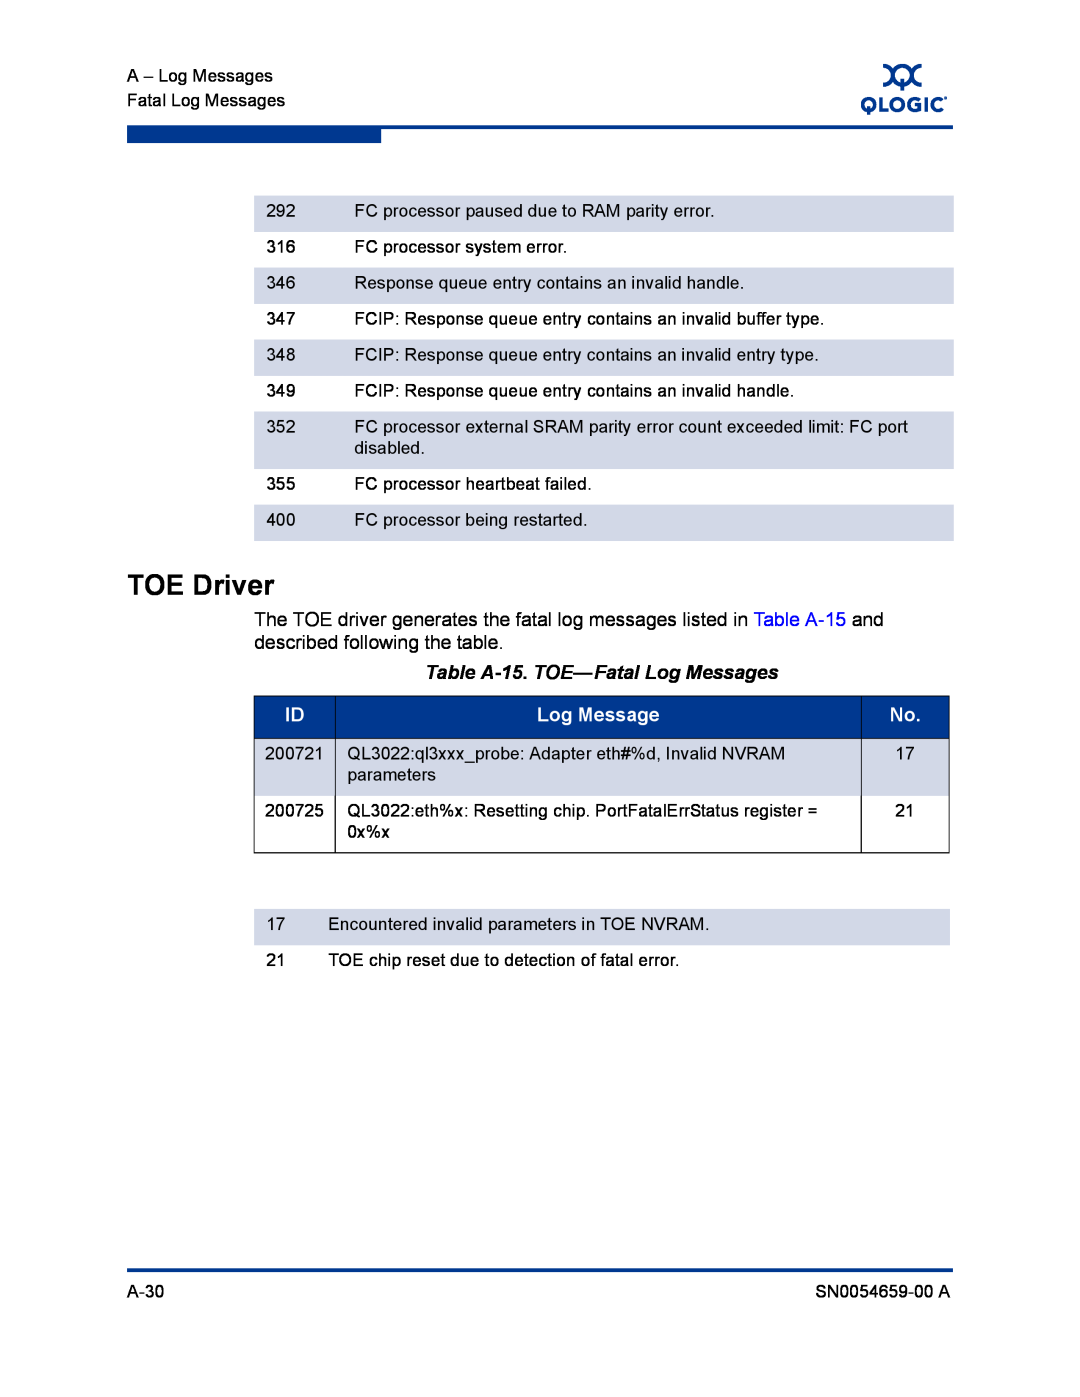 Q-Logic ISR6142 manual Table A-15. TOE-Fatal Log Messages, TOE Driver 